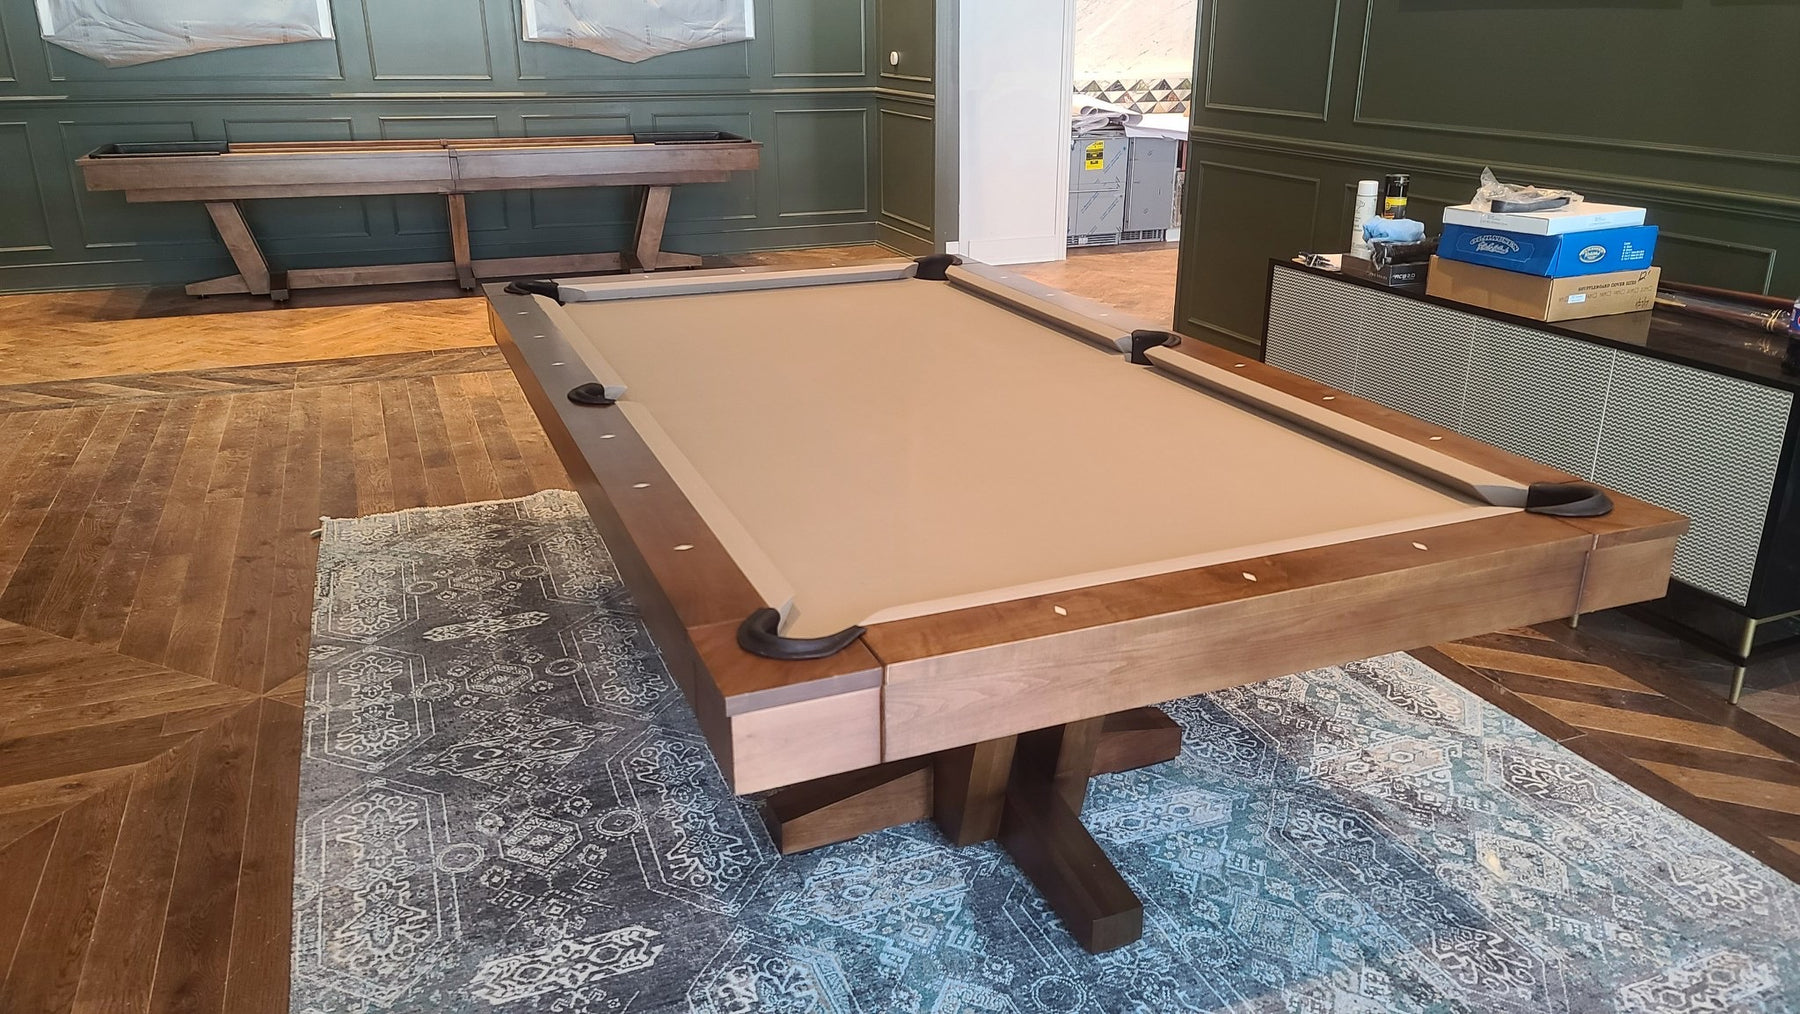 California House Petaluma Pool Table and Shuffleboard Installed in Washington DC